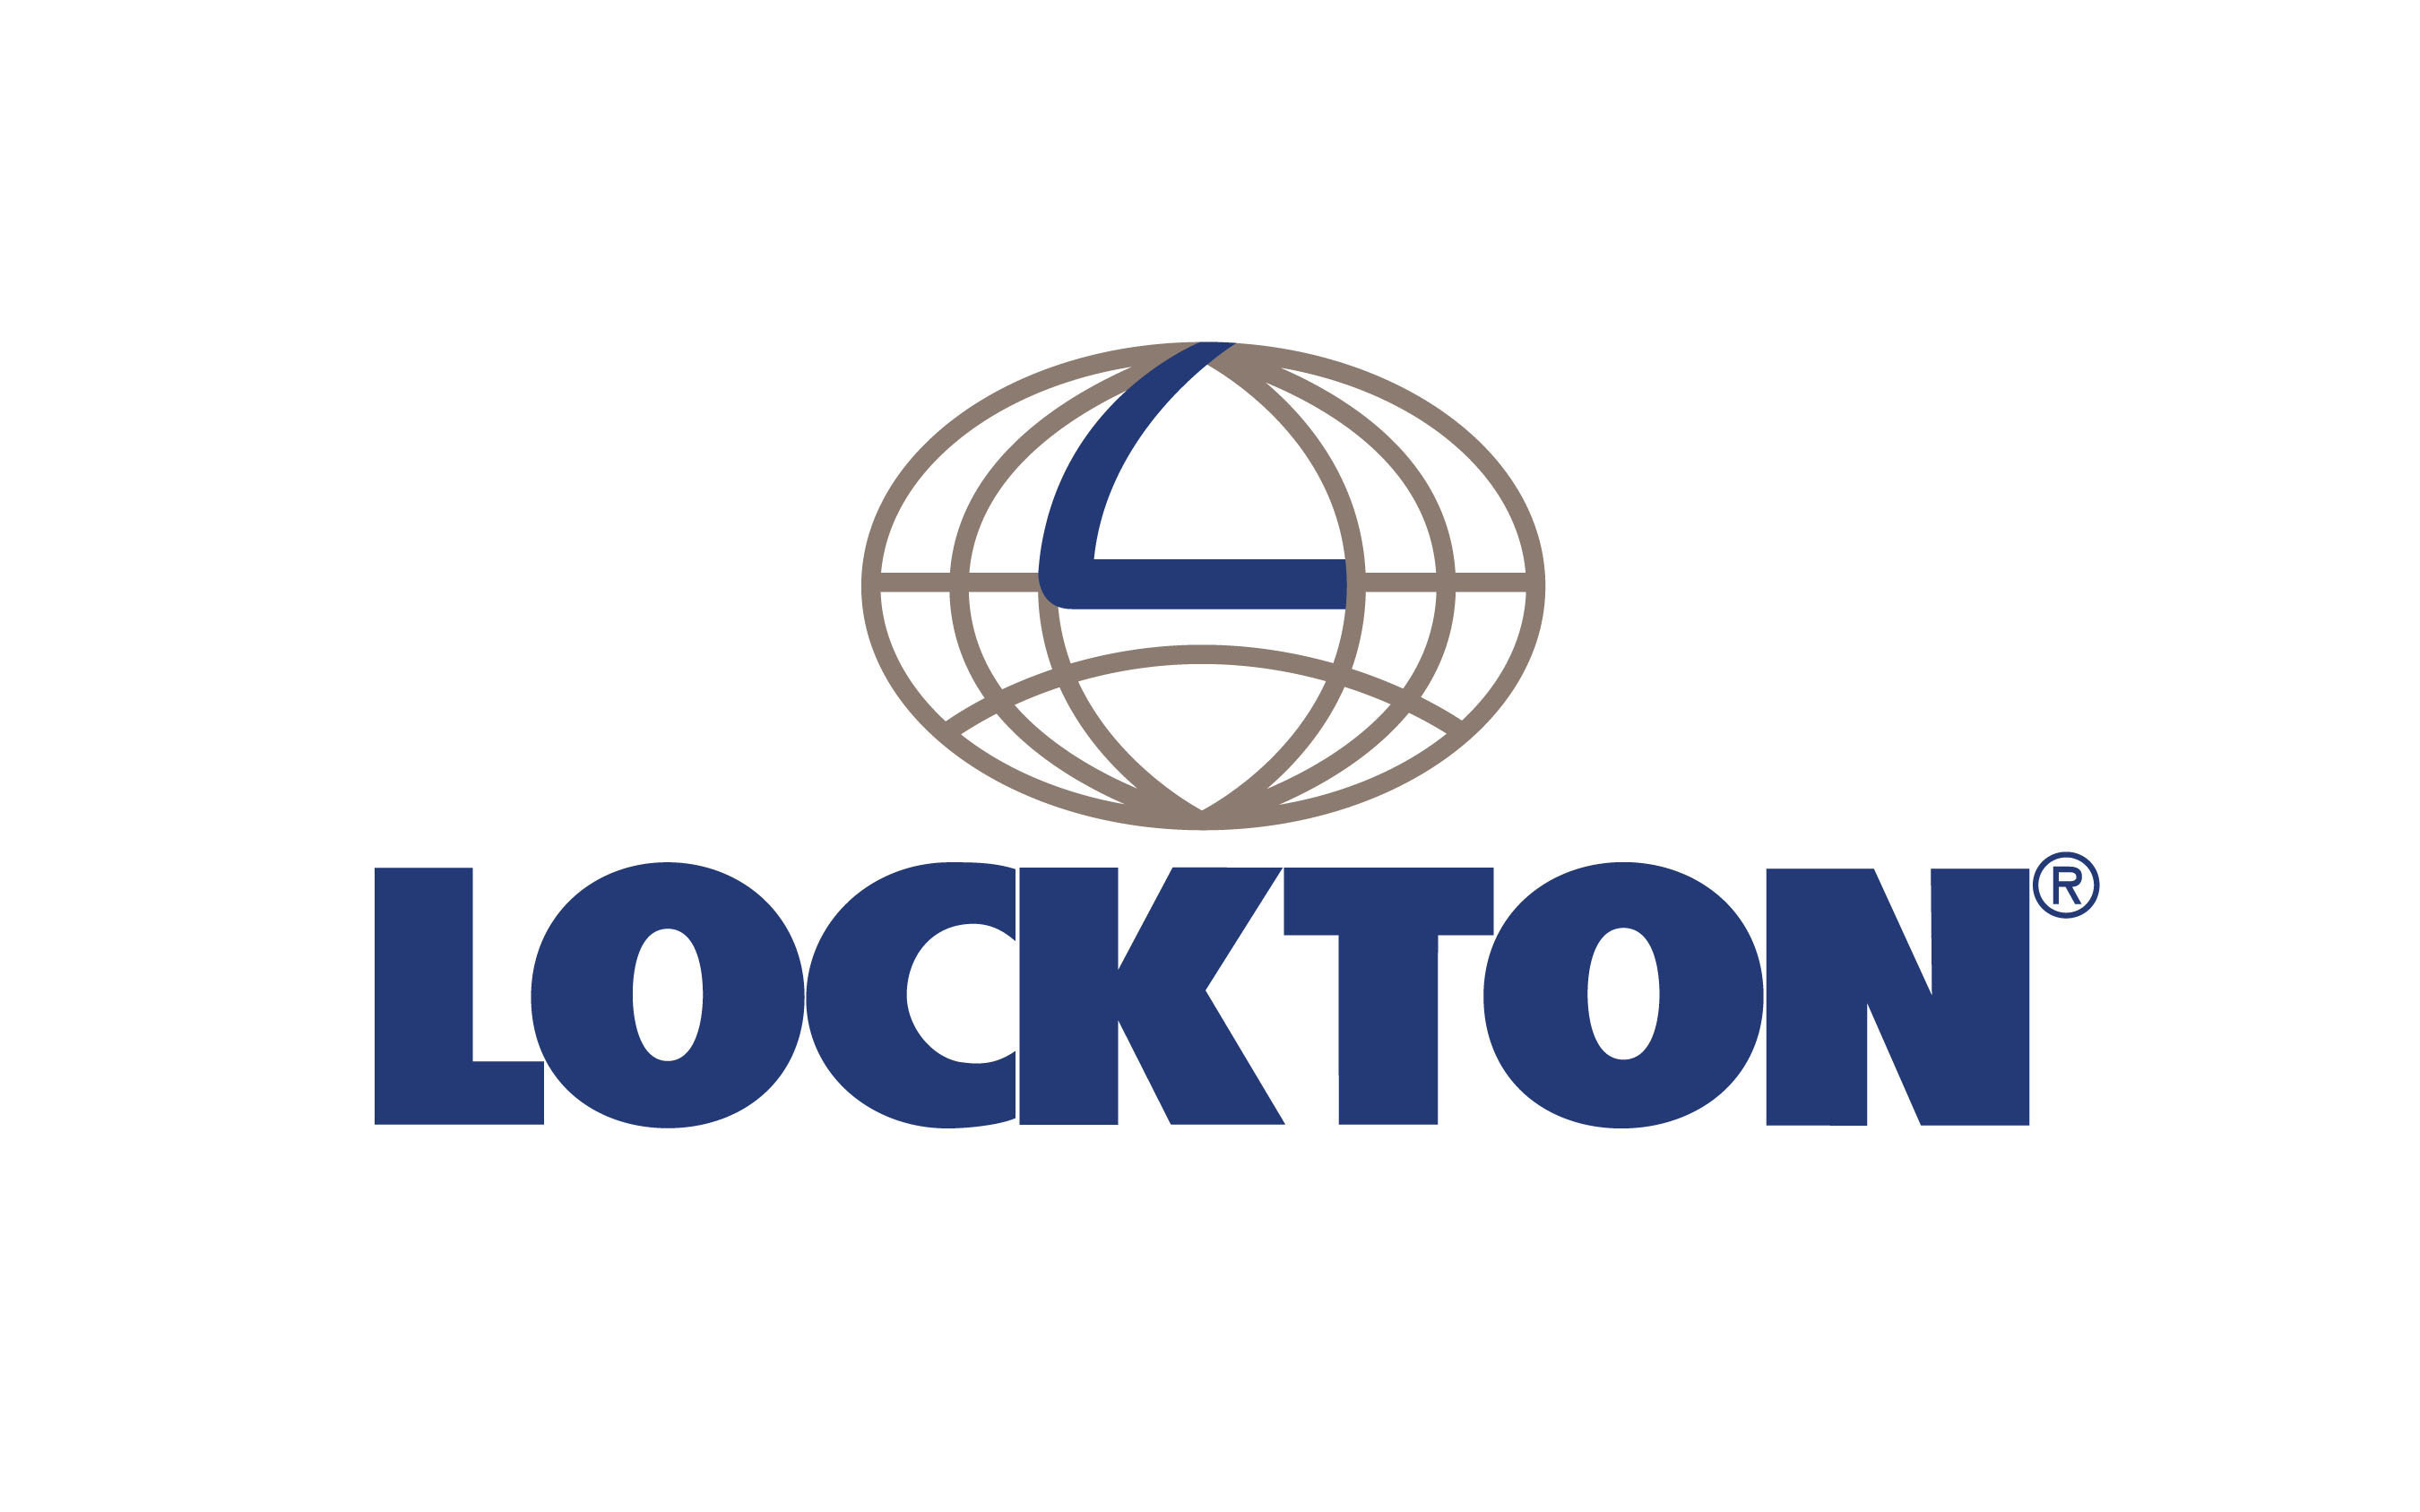 Lockton bolsters LatAm presence with exec hires